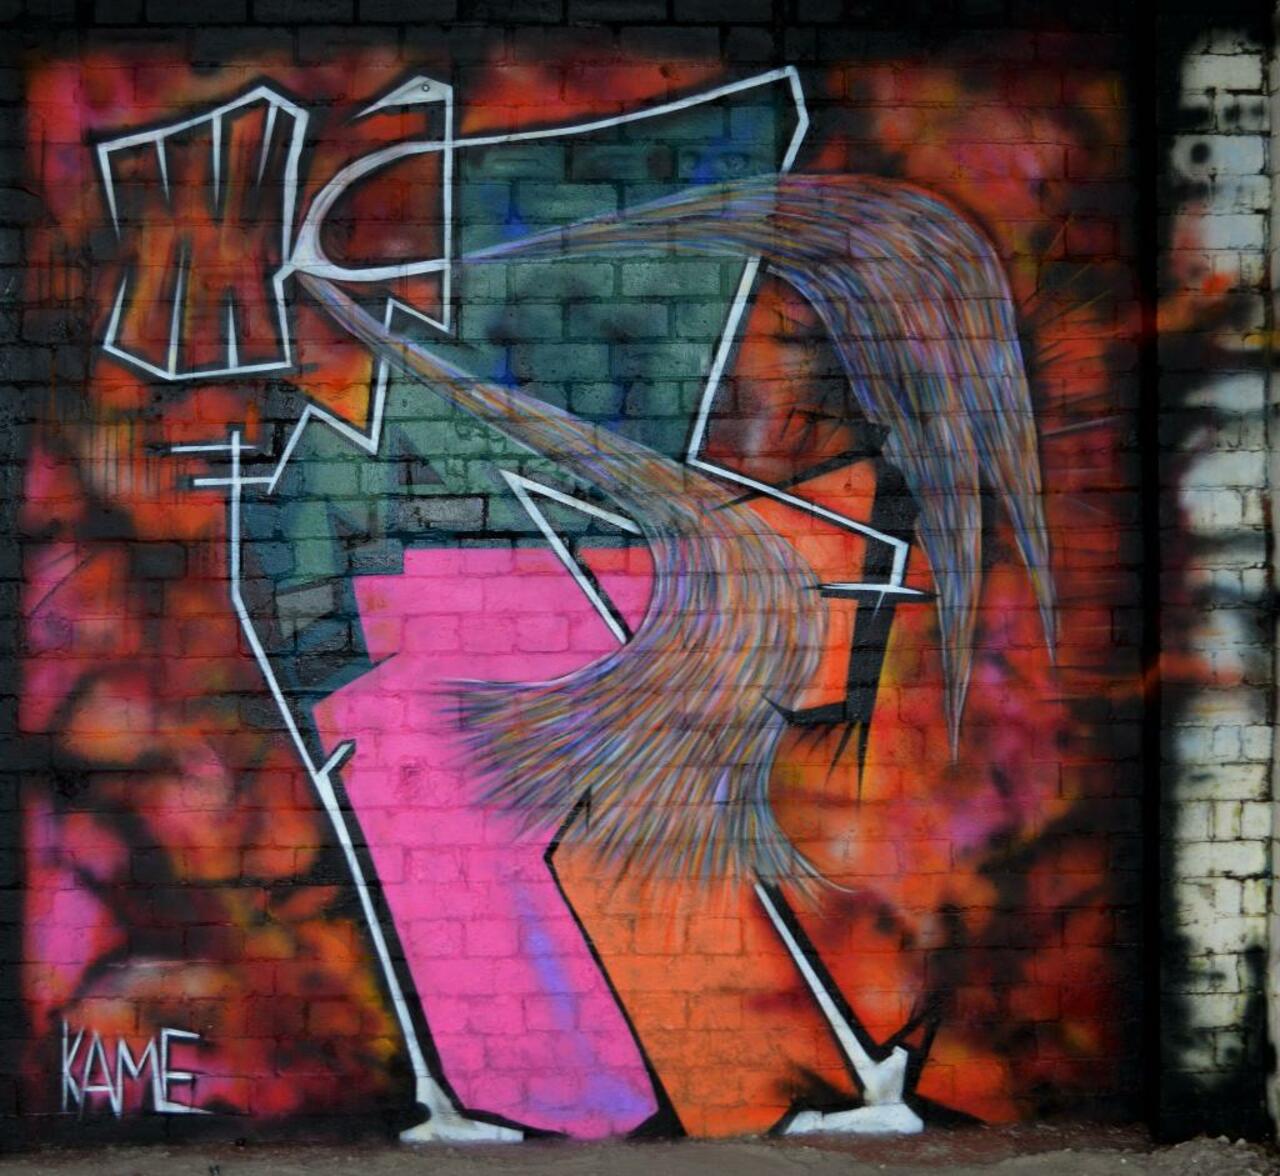 RT @jdaviesarts: Electric Jaws part 2.. Aerosol work. JD. #contemporaryart #painting #art #graffiti #streetart #design #urbex #artist http://t.co/ye8x3f8jR4